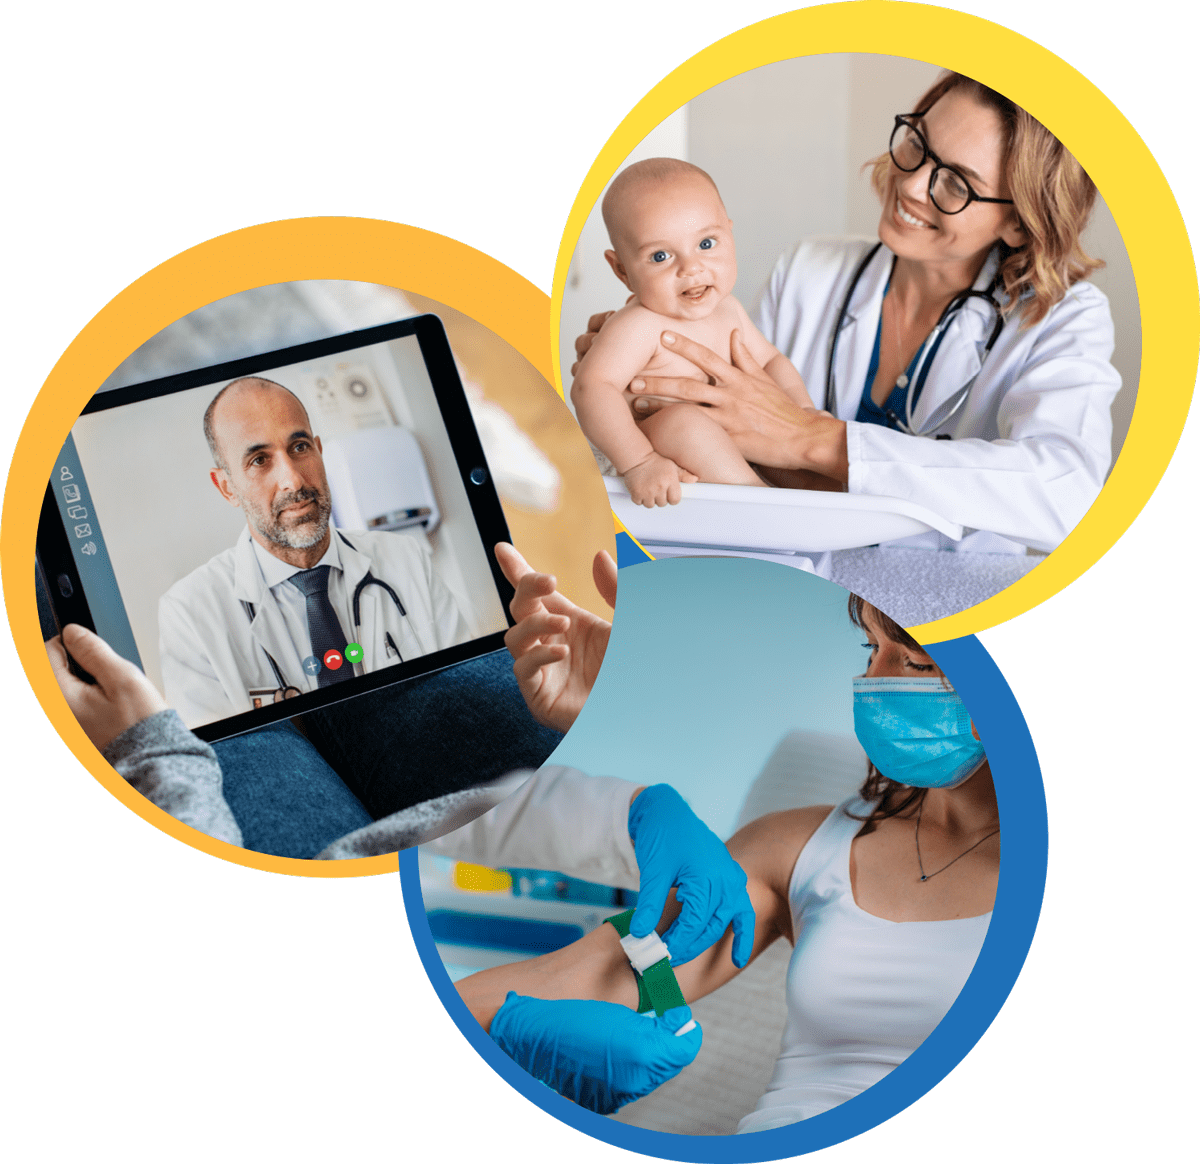 Pediatric Doctors in practice